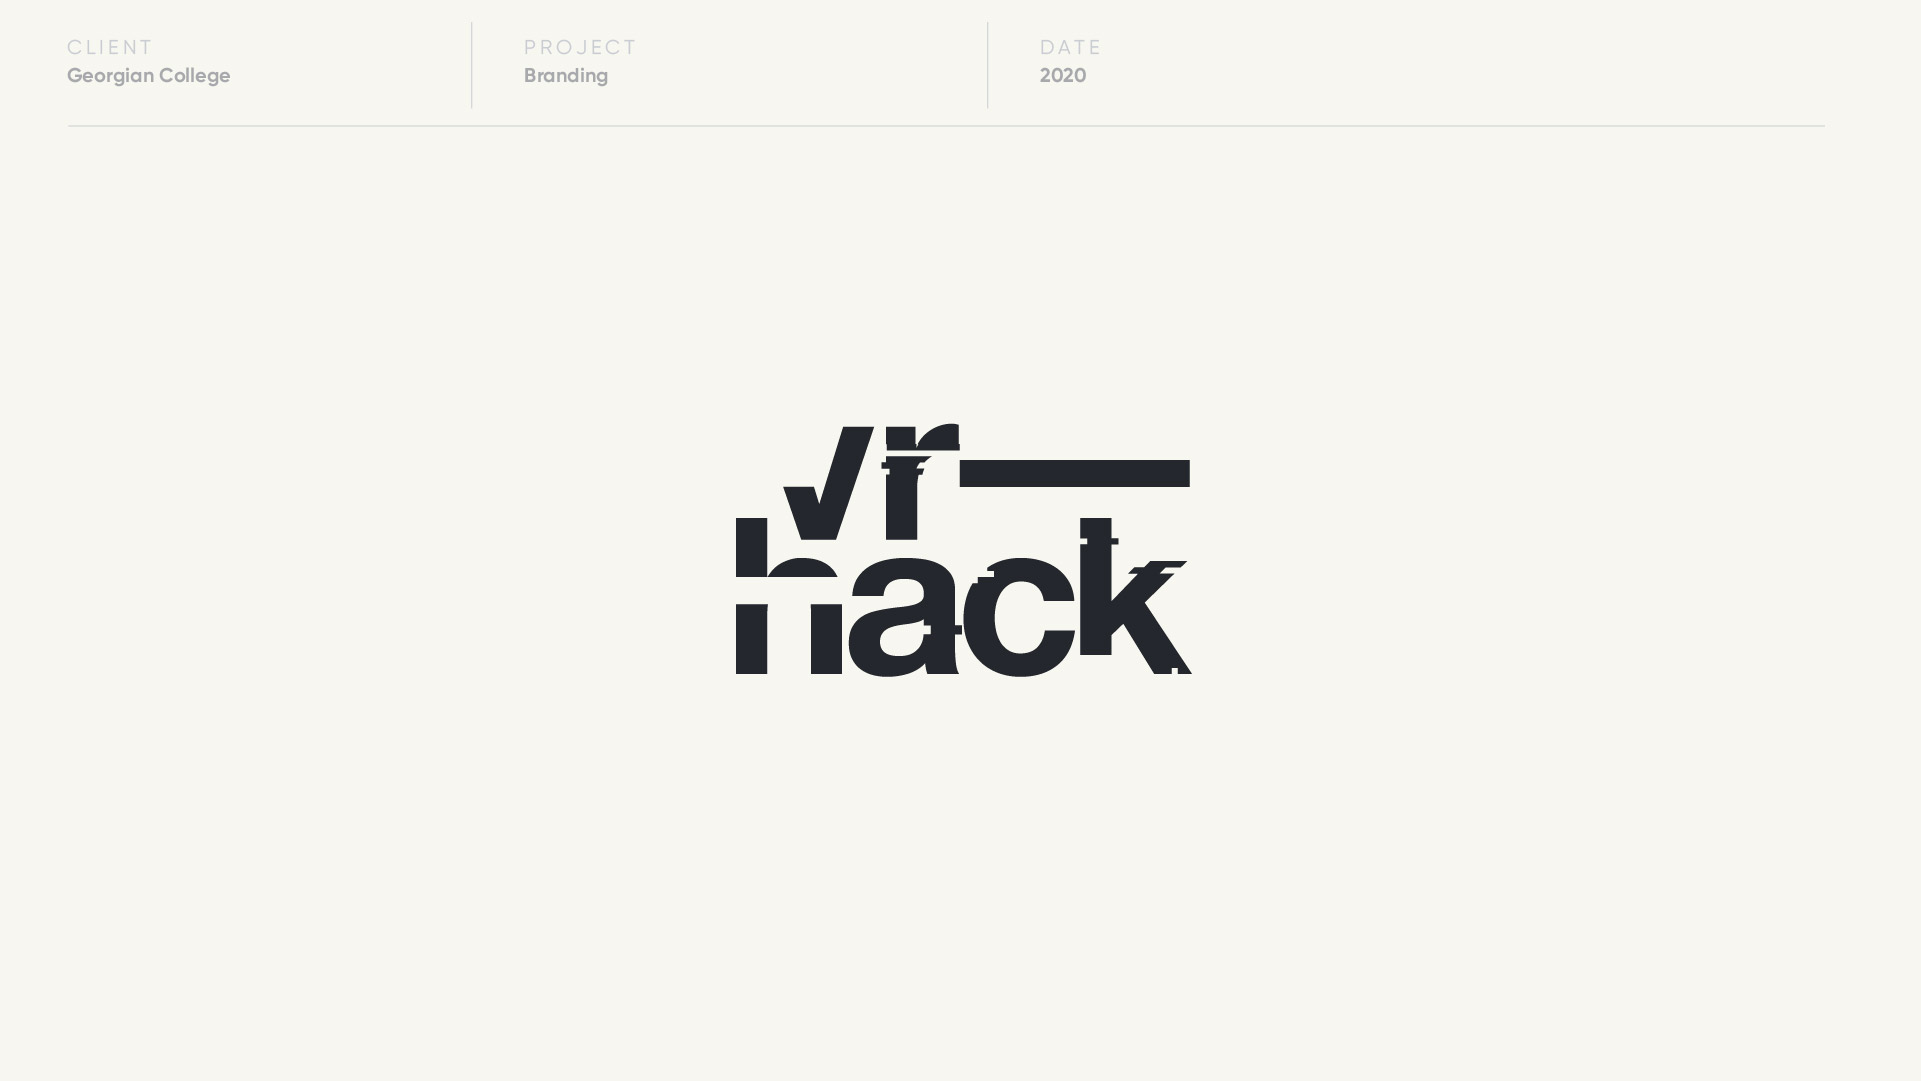 georgian college vr hack logo design by anthony mika